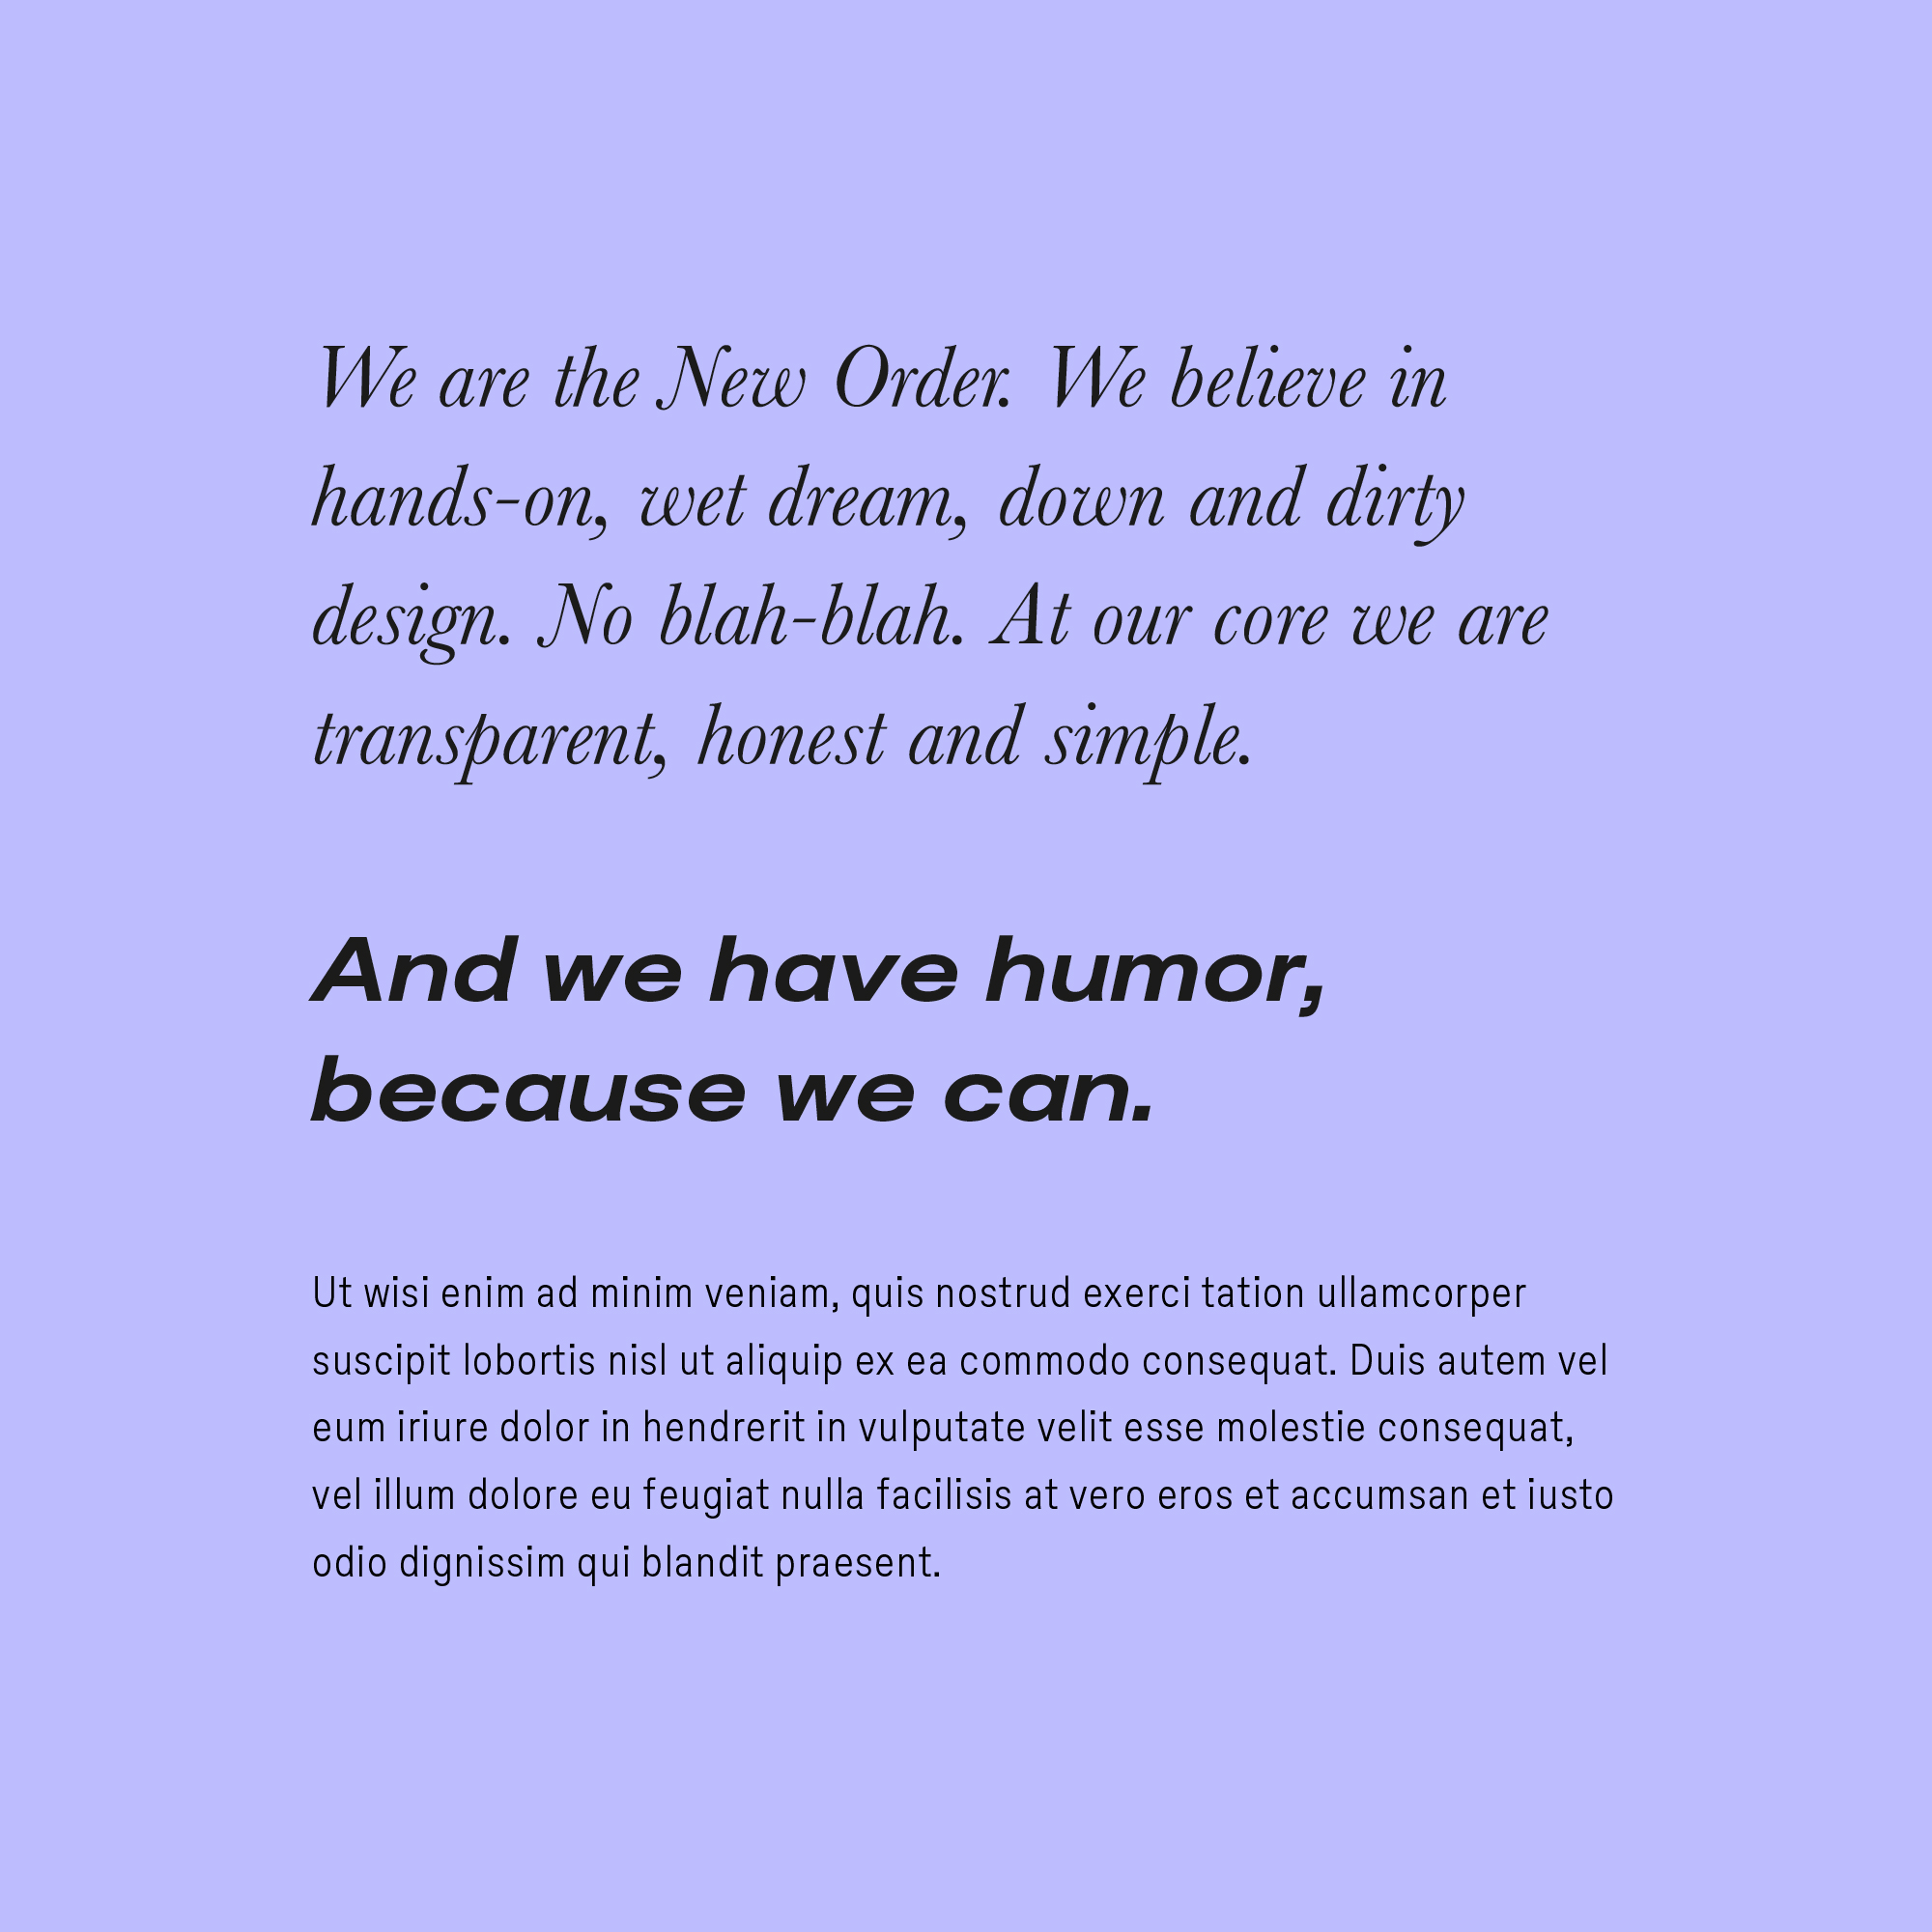 New Order Visual Identity designed by Tobias Heumann